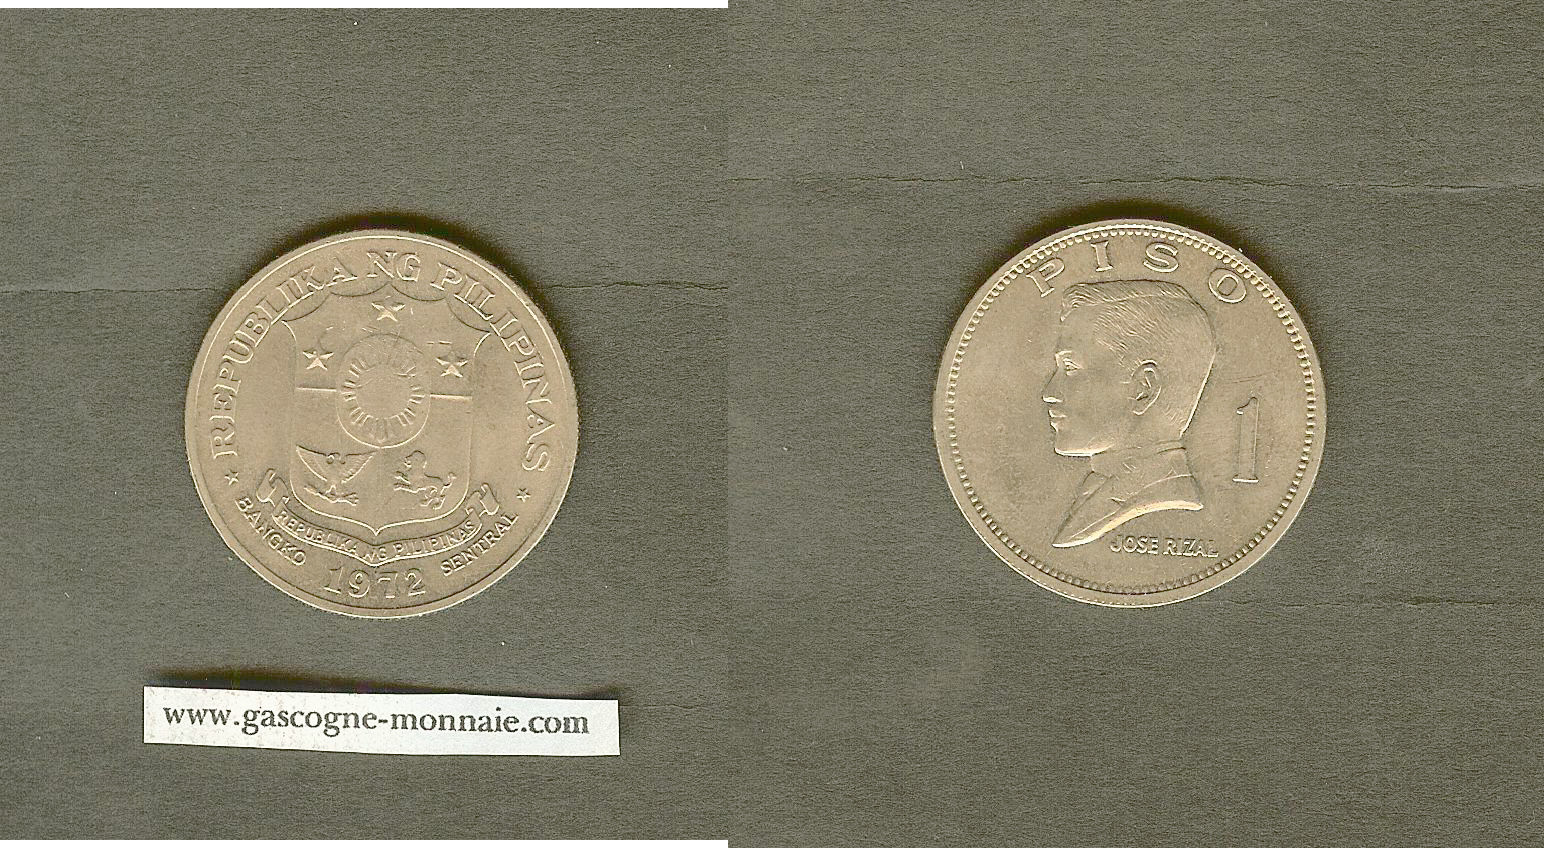 Phillipines 1 peso 1972 Unc